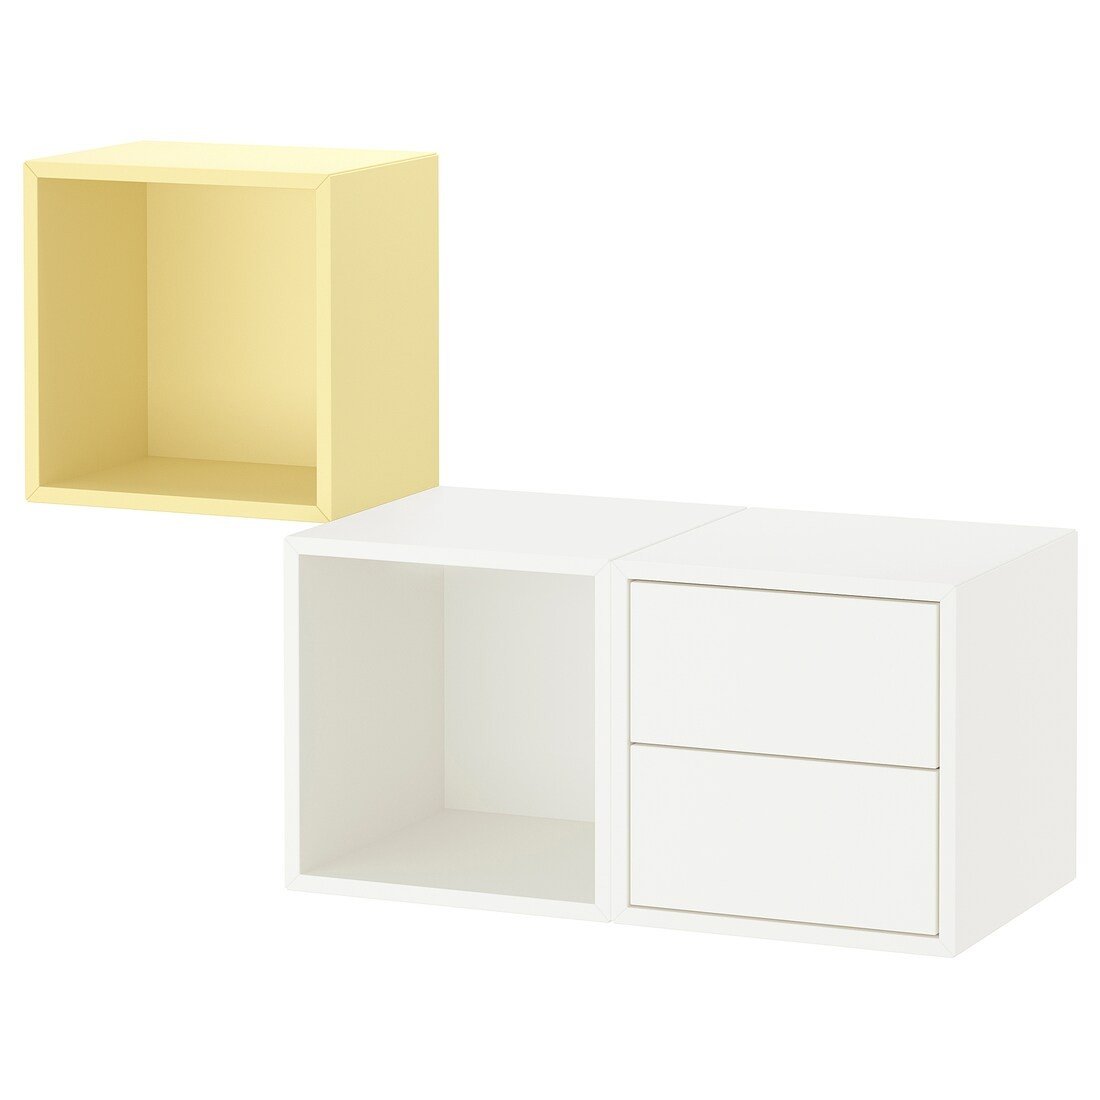 IKEA EKET Настенная комбинация для хранения, белый/бледно-желтый, 105x35x70 см 39521688 395.216.88